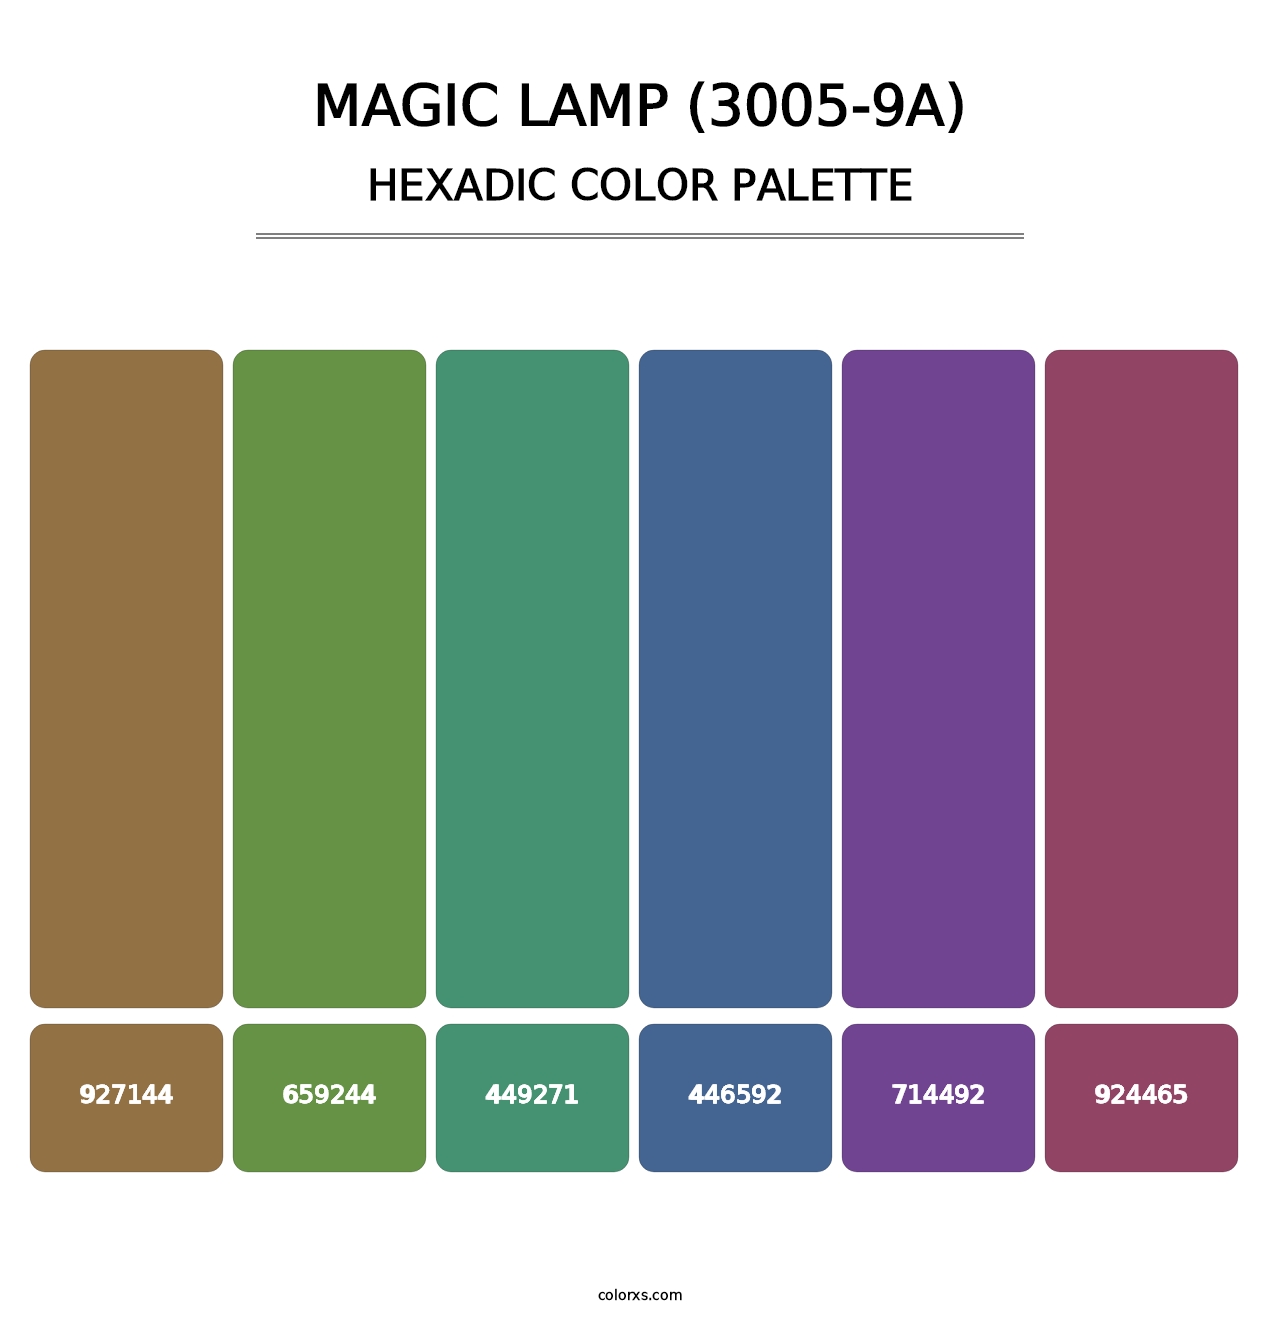 Magic Lamp (3005-9A) - Hexadic Color Palette